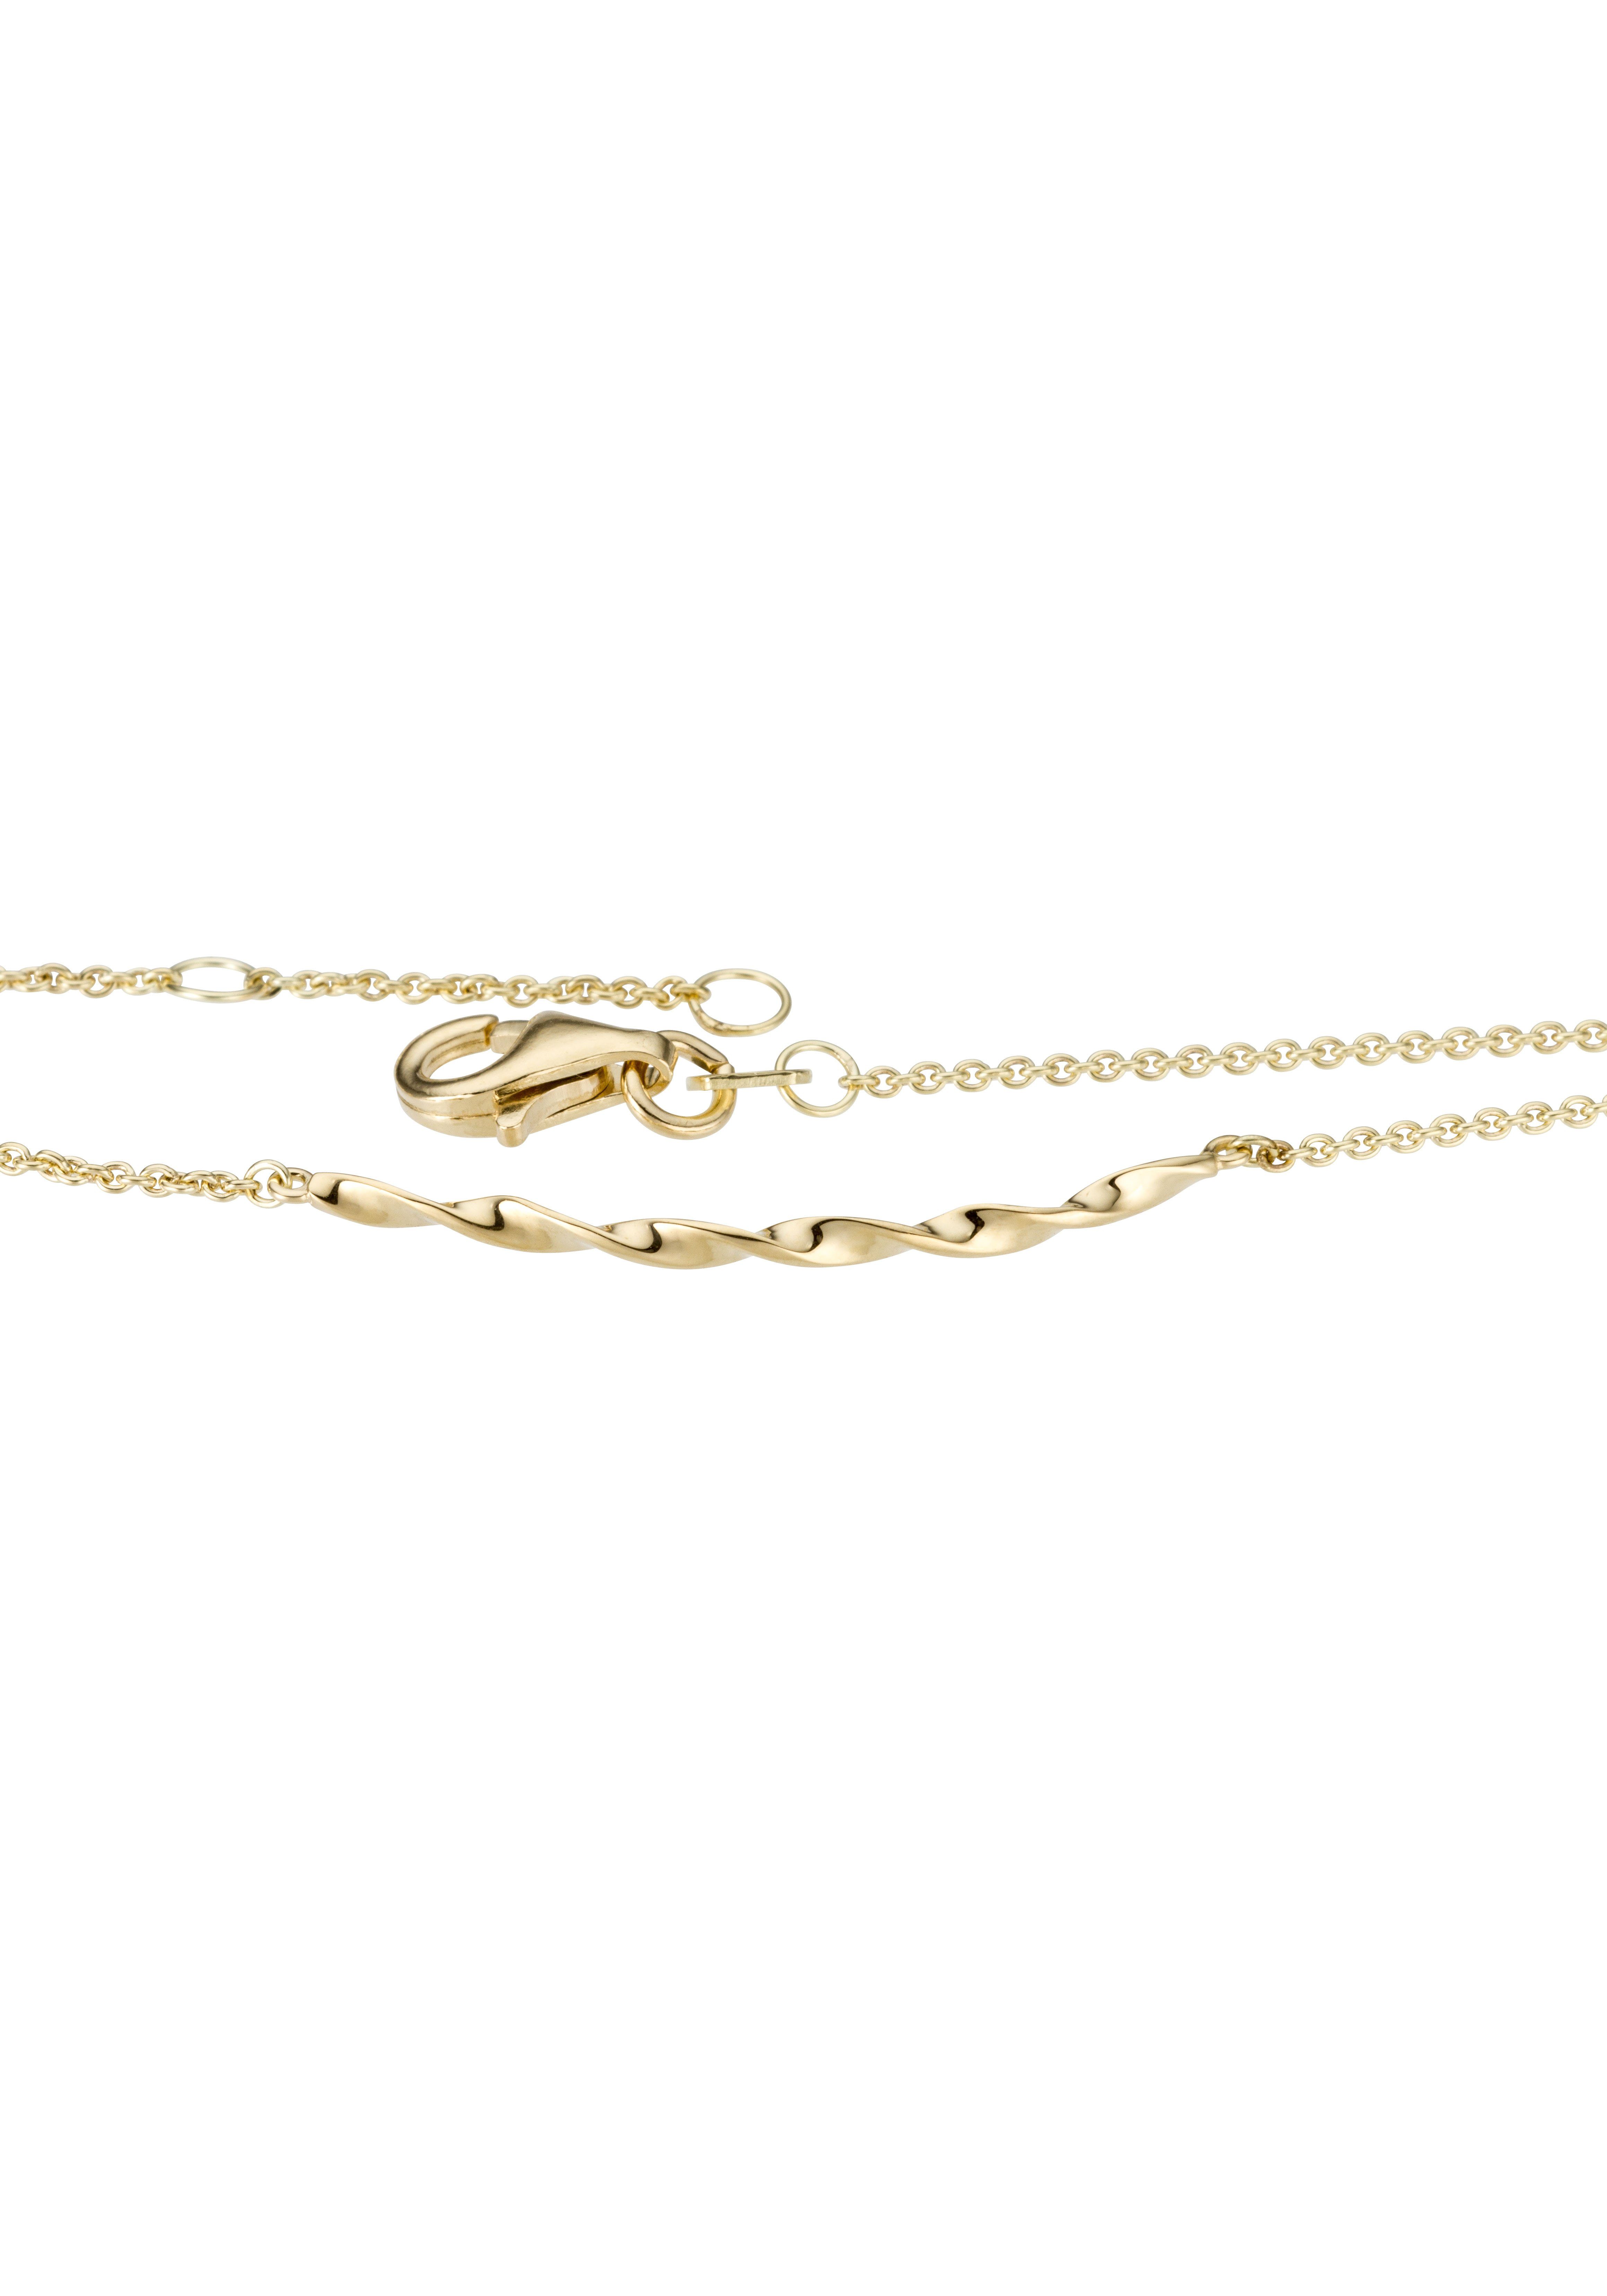 Firetti Goldarmband Schmuck Geschenk Gold 585, glänzend, gedrehtes Element, zu Kleid, Shirt, Jeans, Sneaker! Anlass Geburtstag Weihnachten | Goldarmbänder